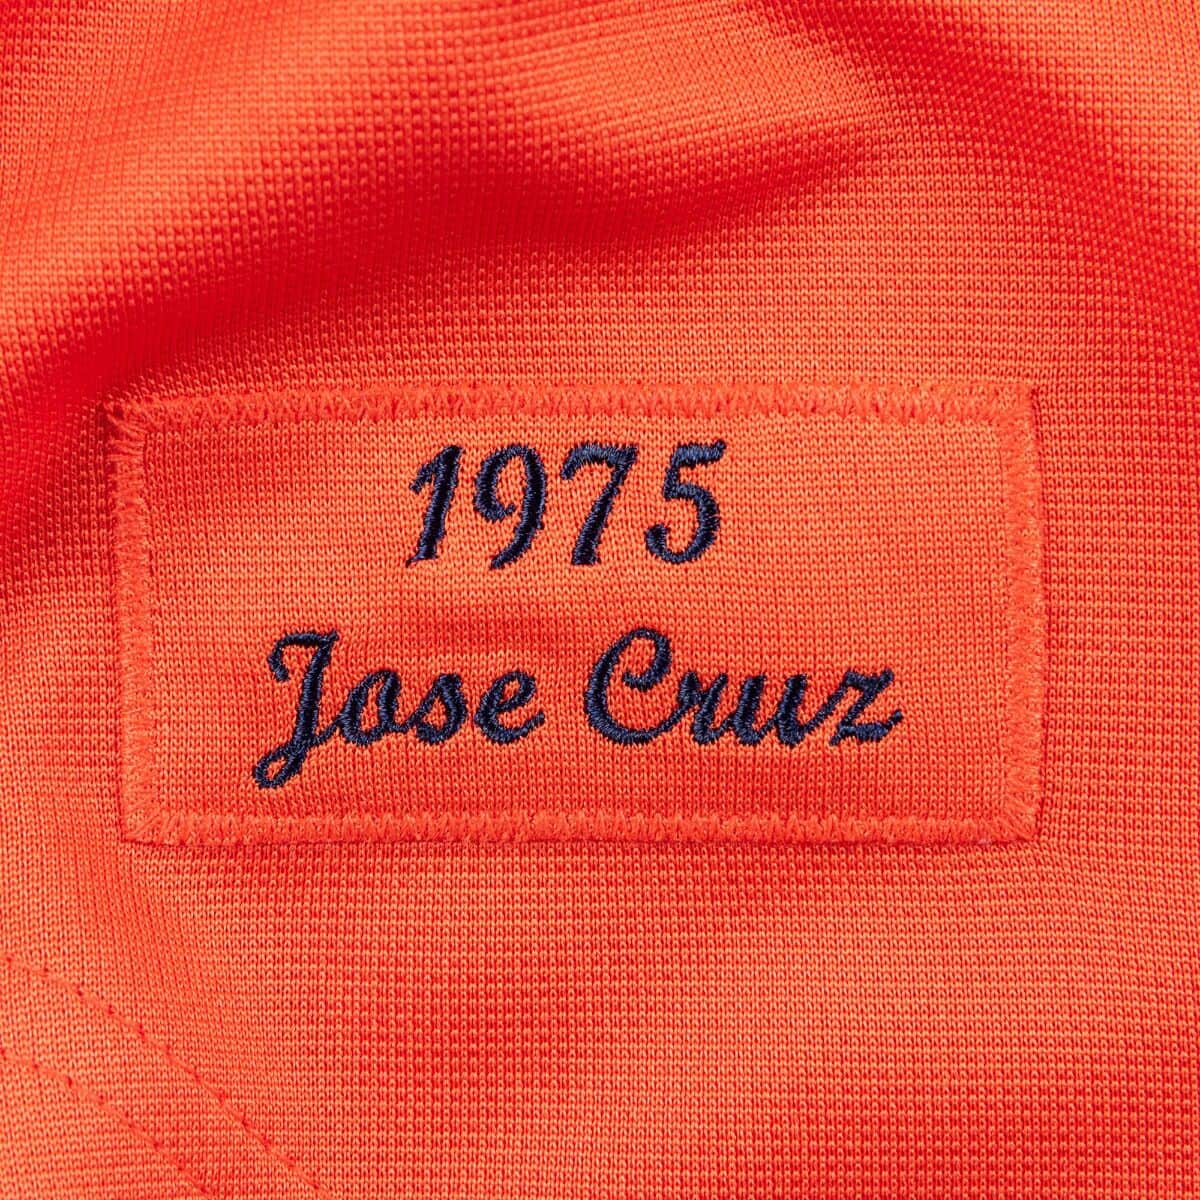 Authentic Jersey Houston Astros Home 1975 Jose Cruz – Super Fan Gear Box